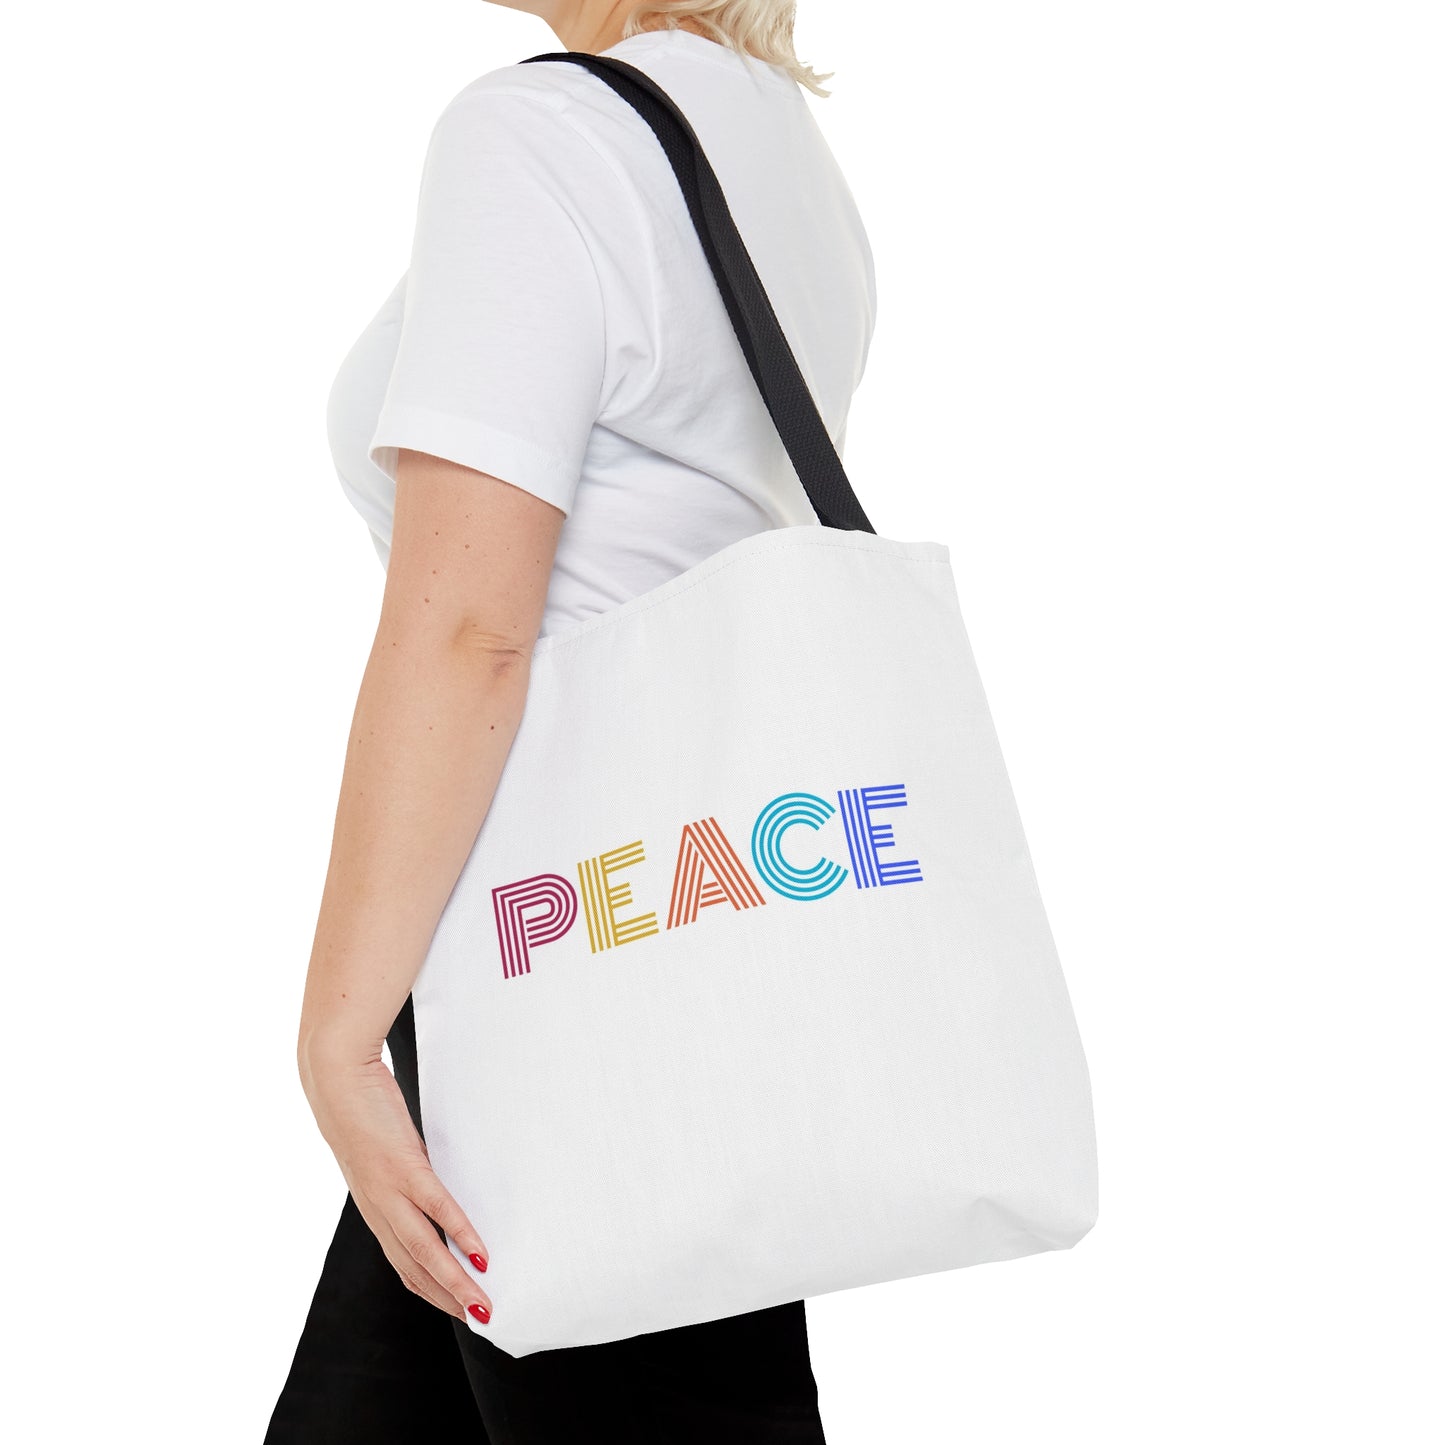 PEACE Tote Bag, White